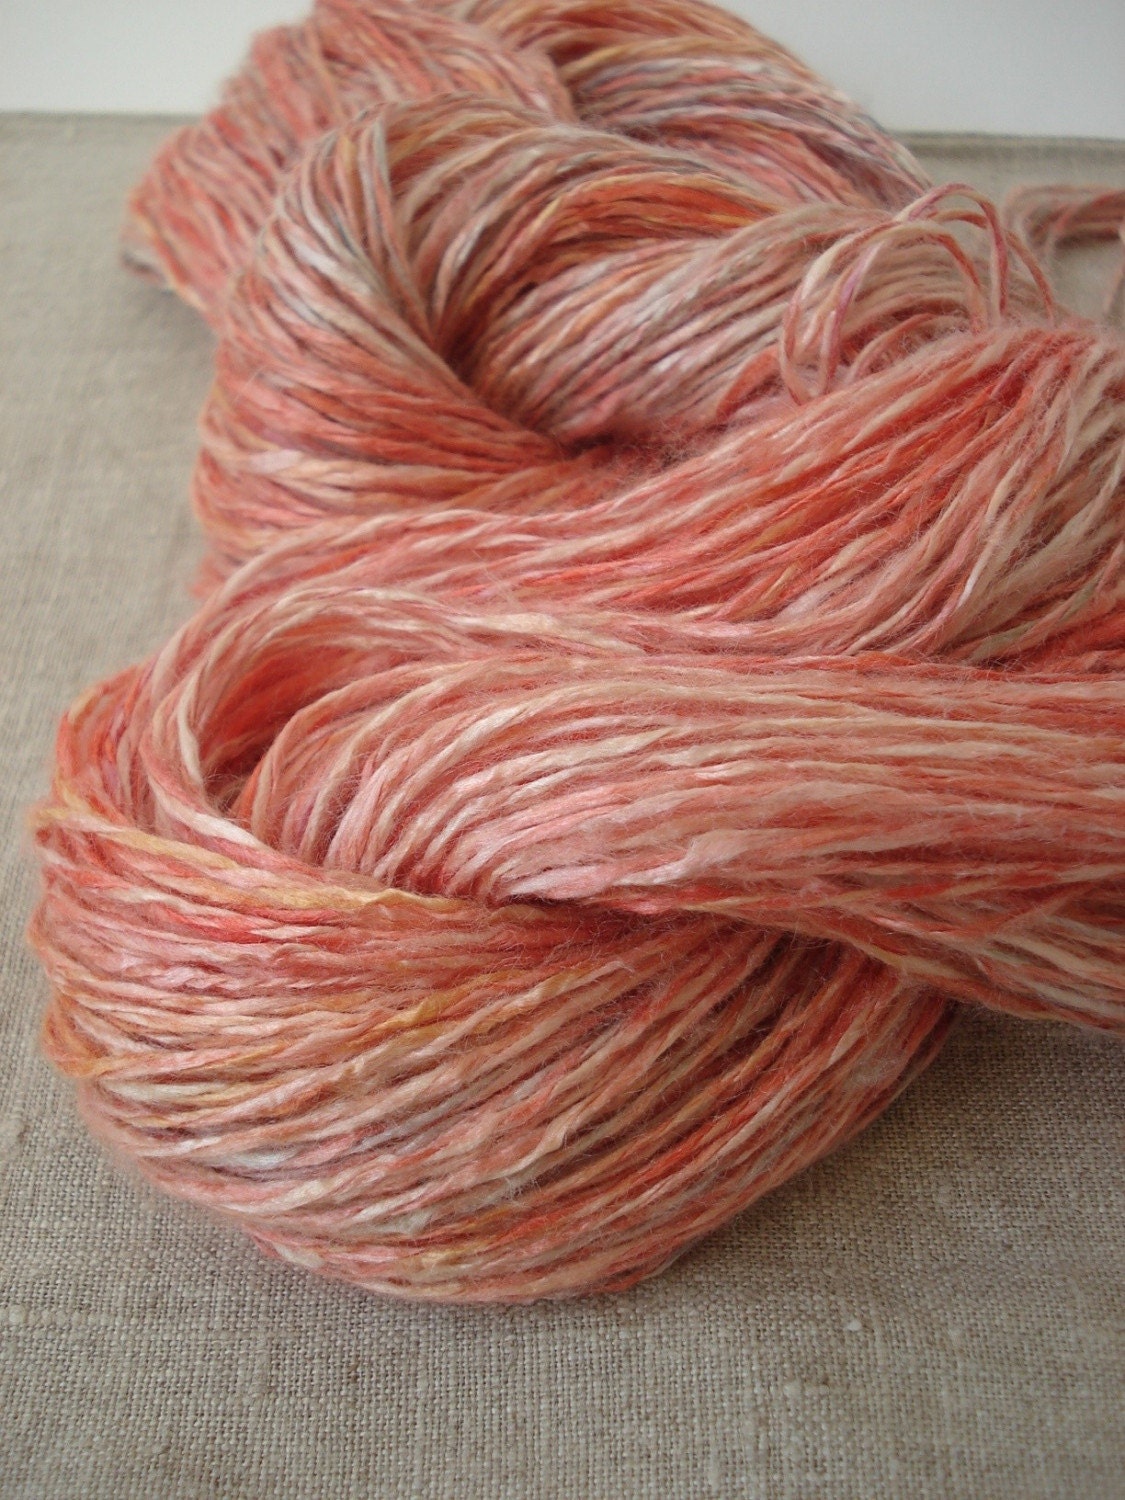 Red handspun pure silk yarn, over 200 yards, 3.4oz